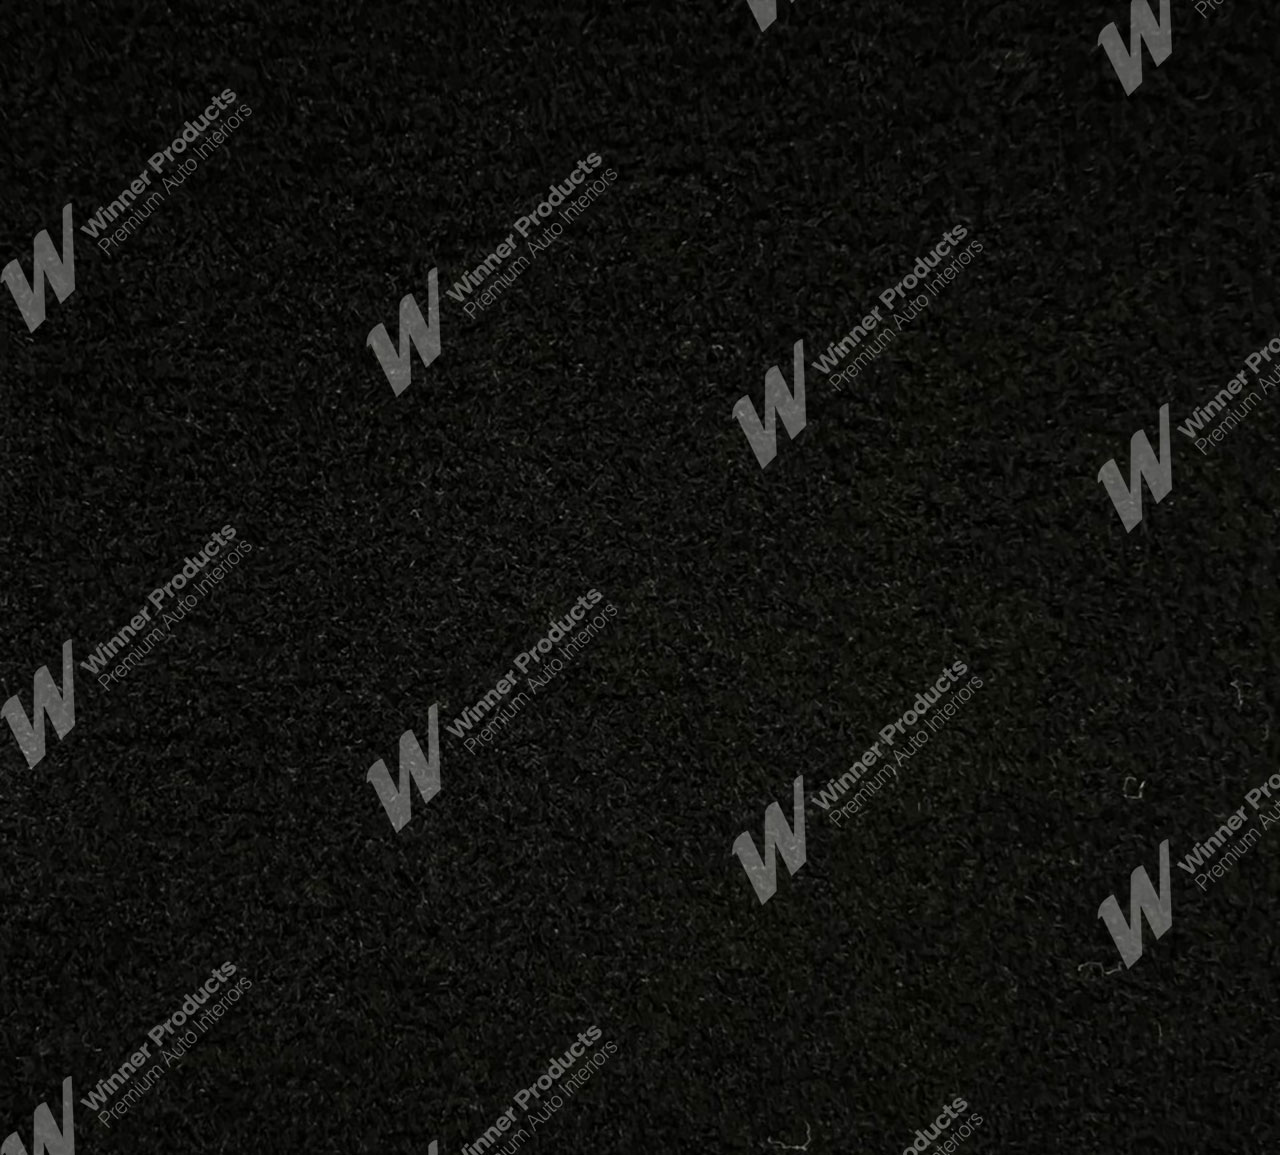 Holden Statesman HQ Statesman Deville 71-72 28M Flax & Black & Diamond Weave Carpet (Image 1 of 1)